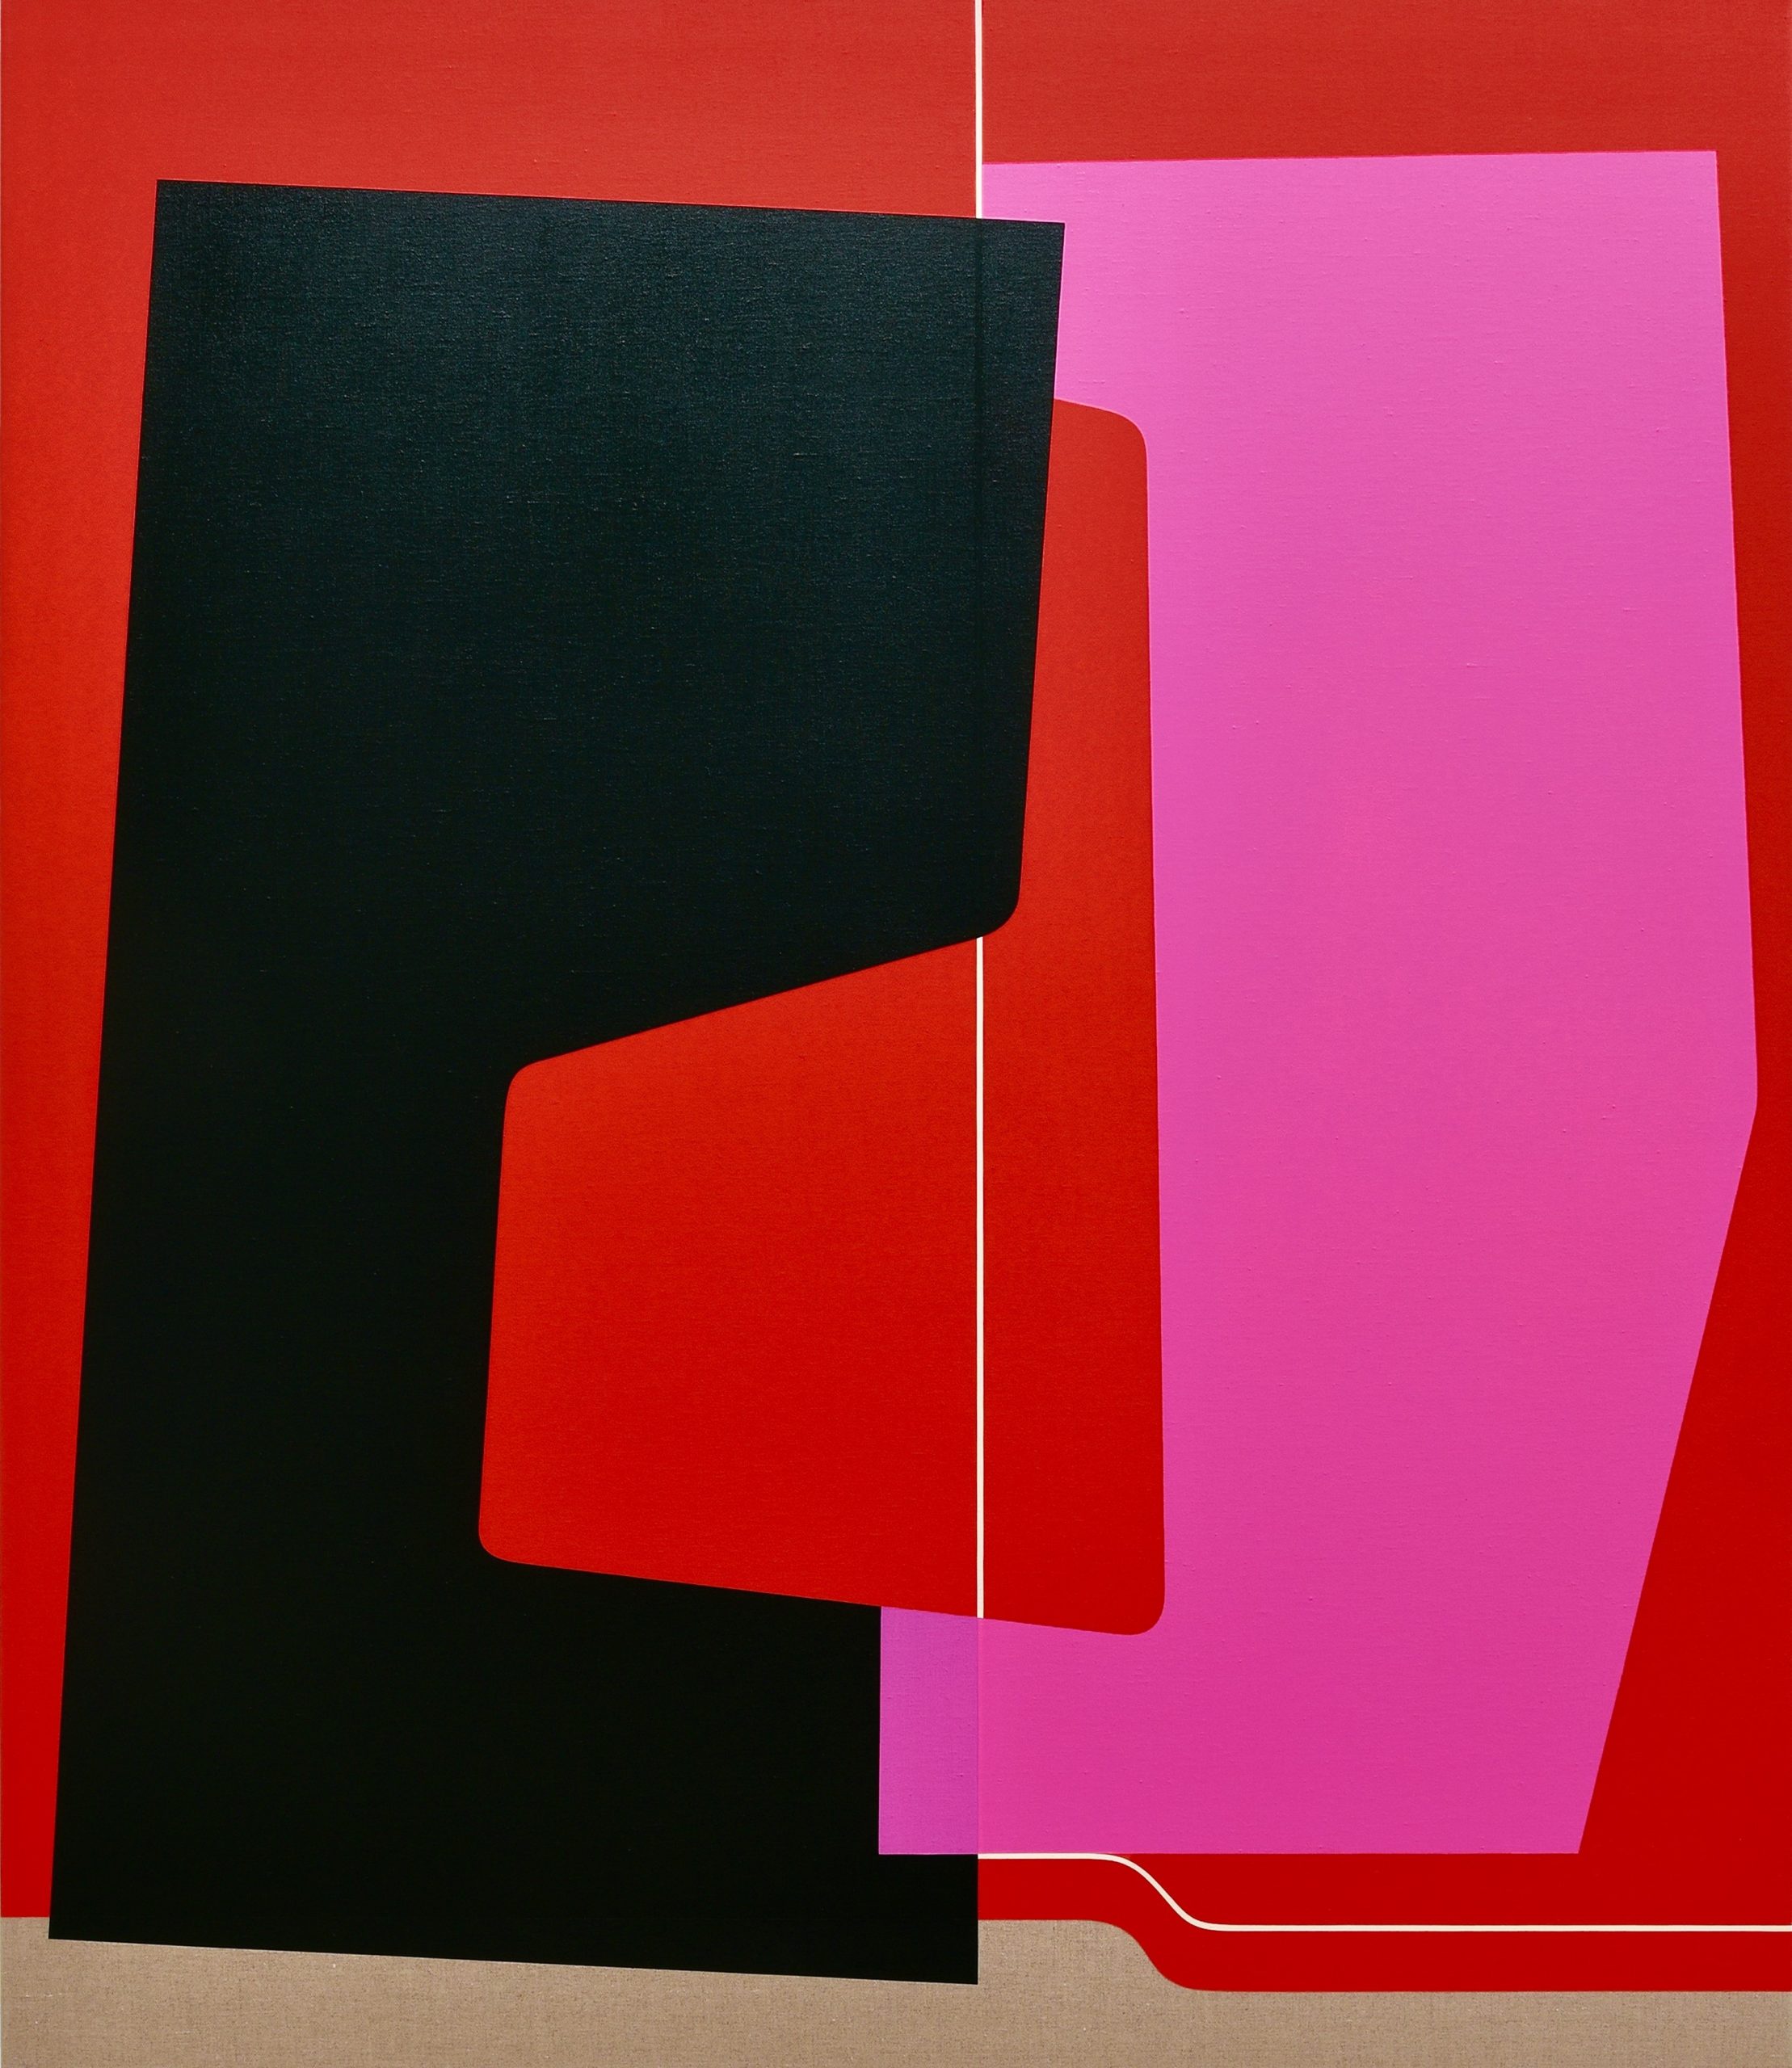 Matthew Browne 'Ceannas' vinyl tempera and oil on linen 140 x 120cm $14,500